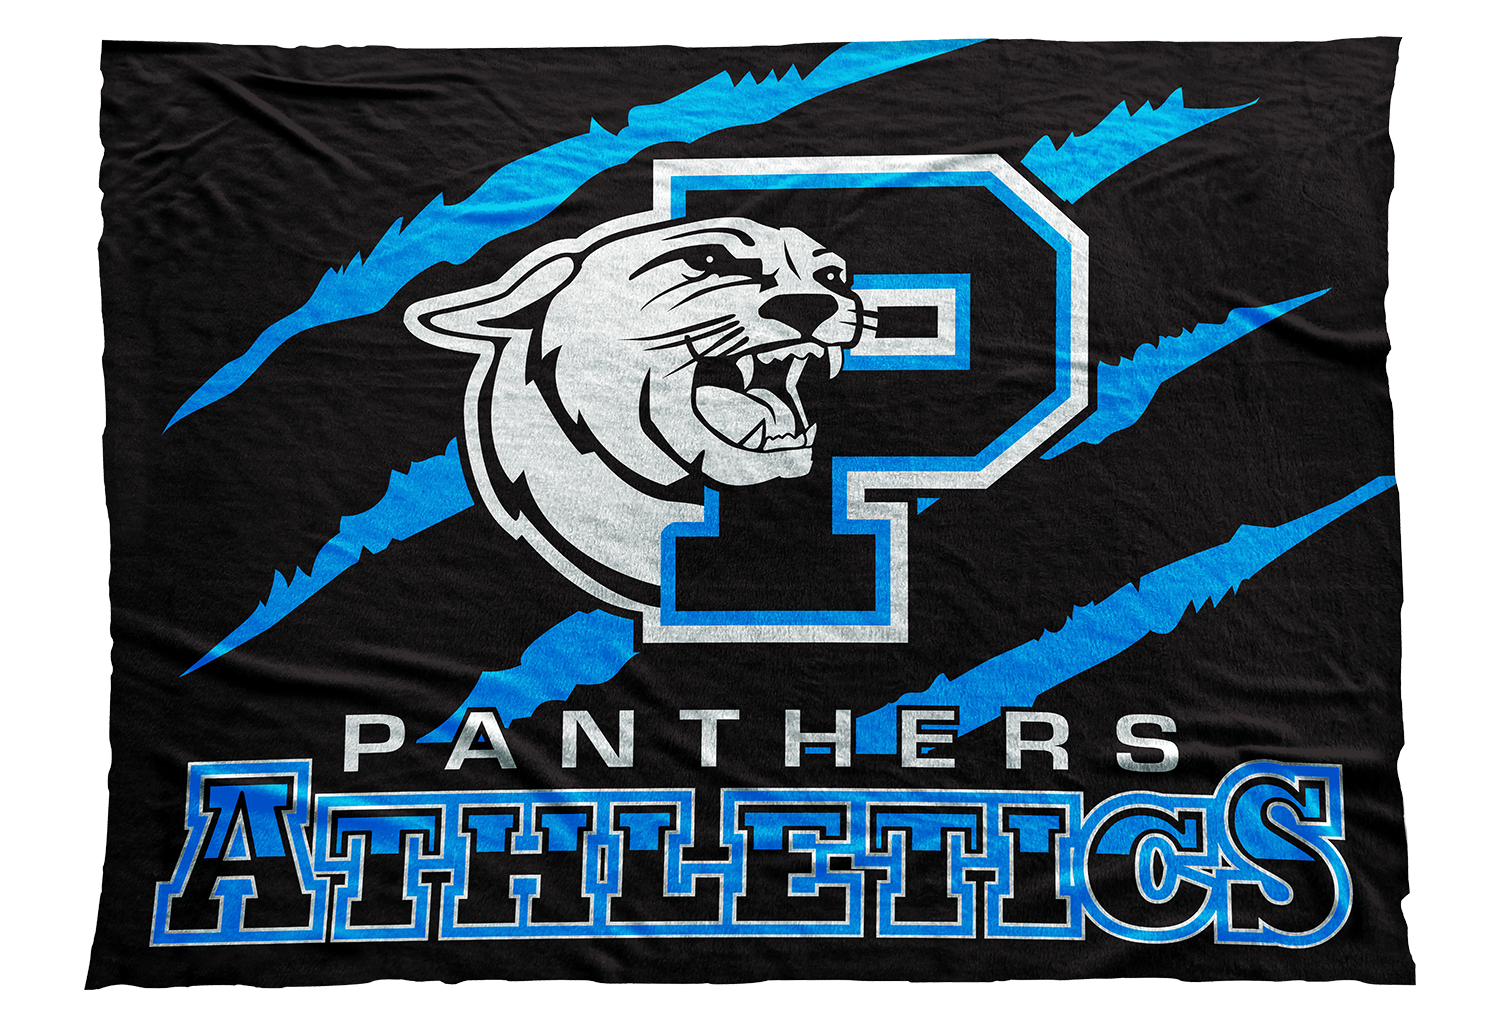 Panther Athletics